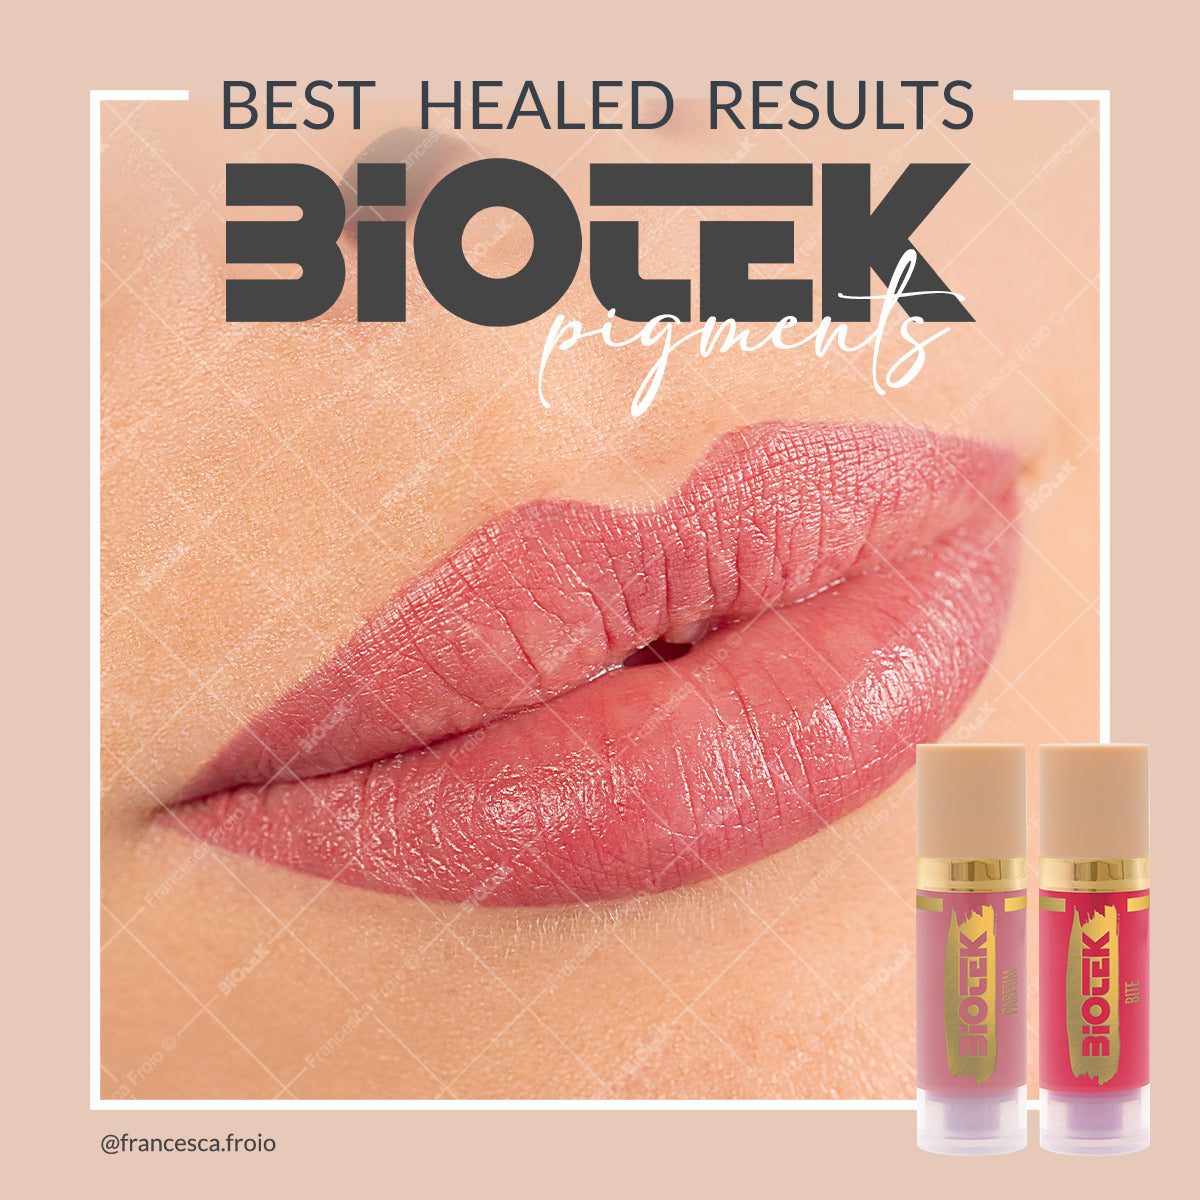 Zaceljen rad trajne sminke usana Biotek pigmentima.